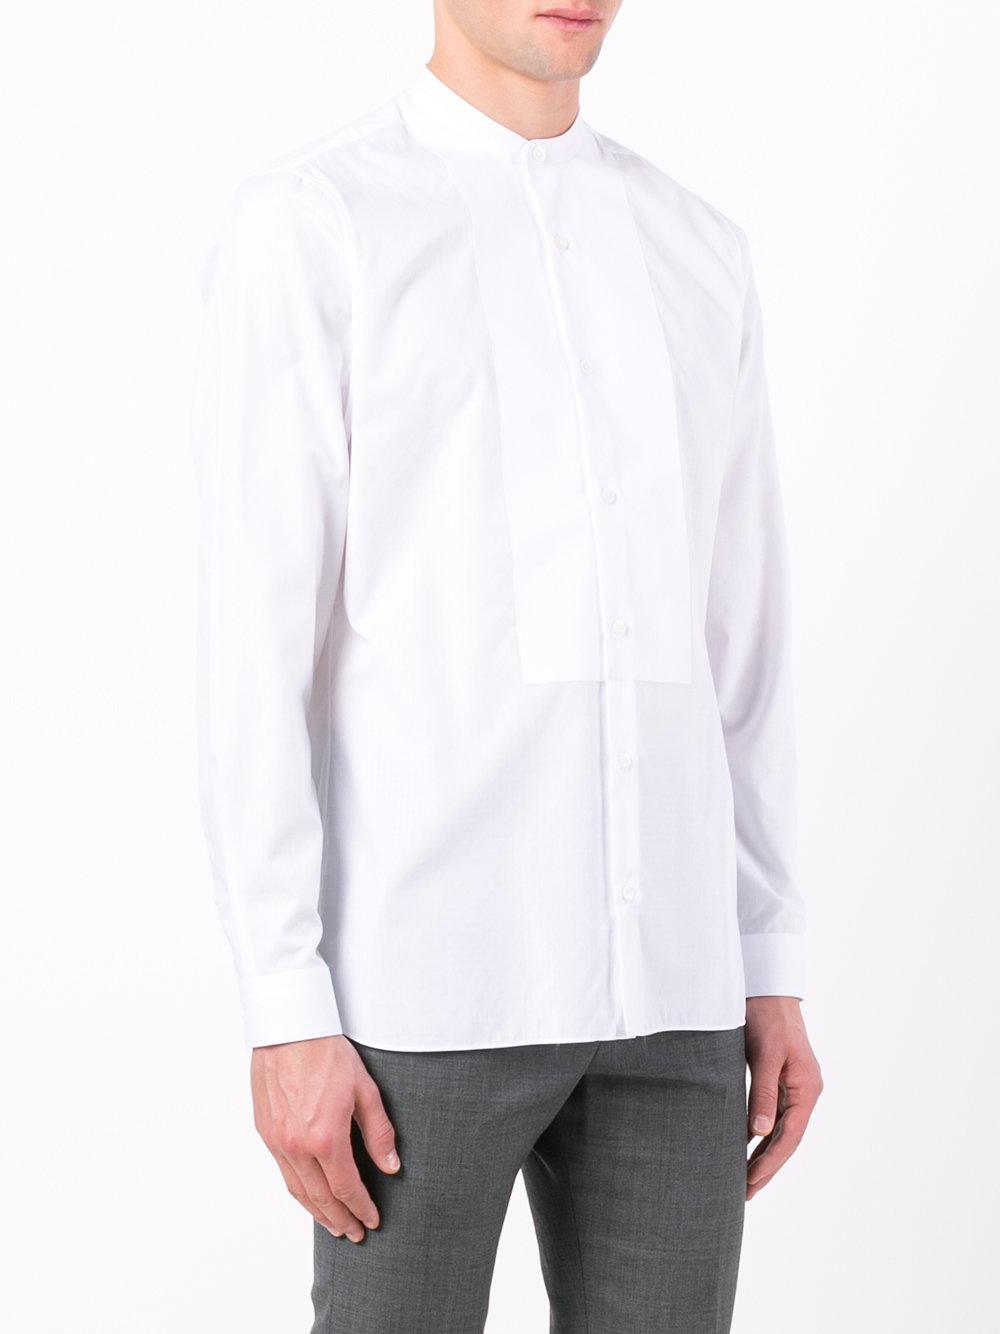 Z Zegna Cotton Collarless Shirt in White for Men - Lyst